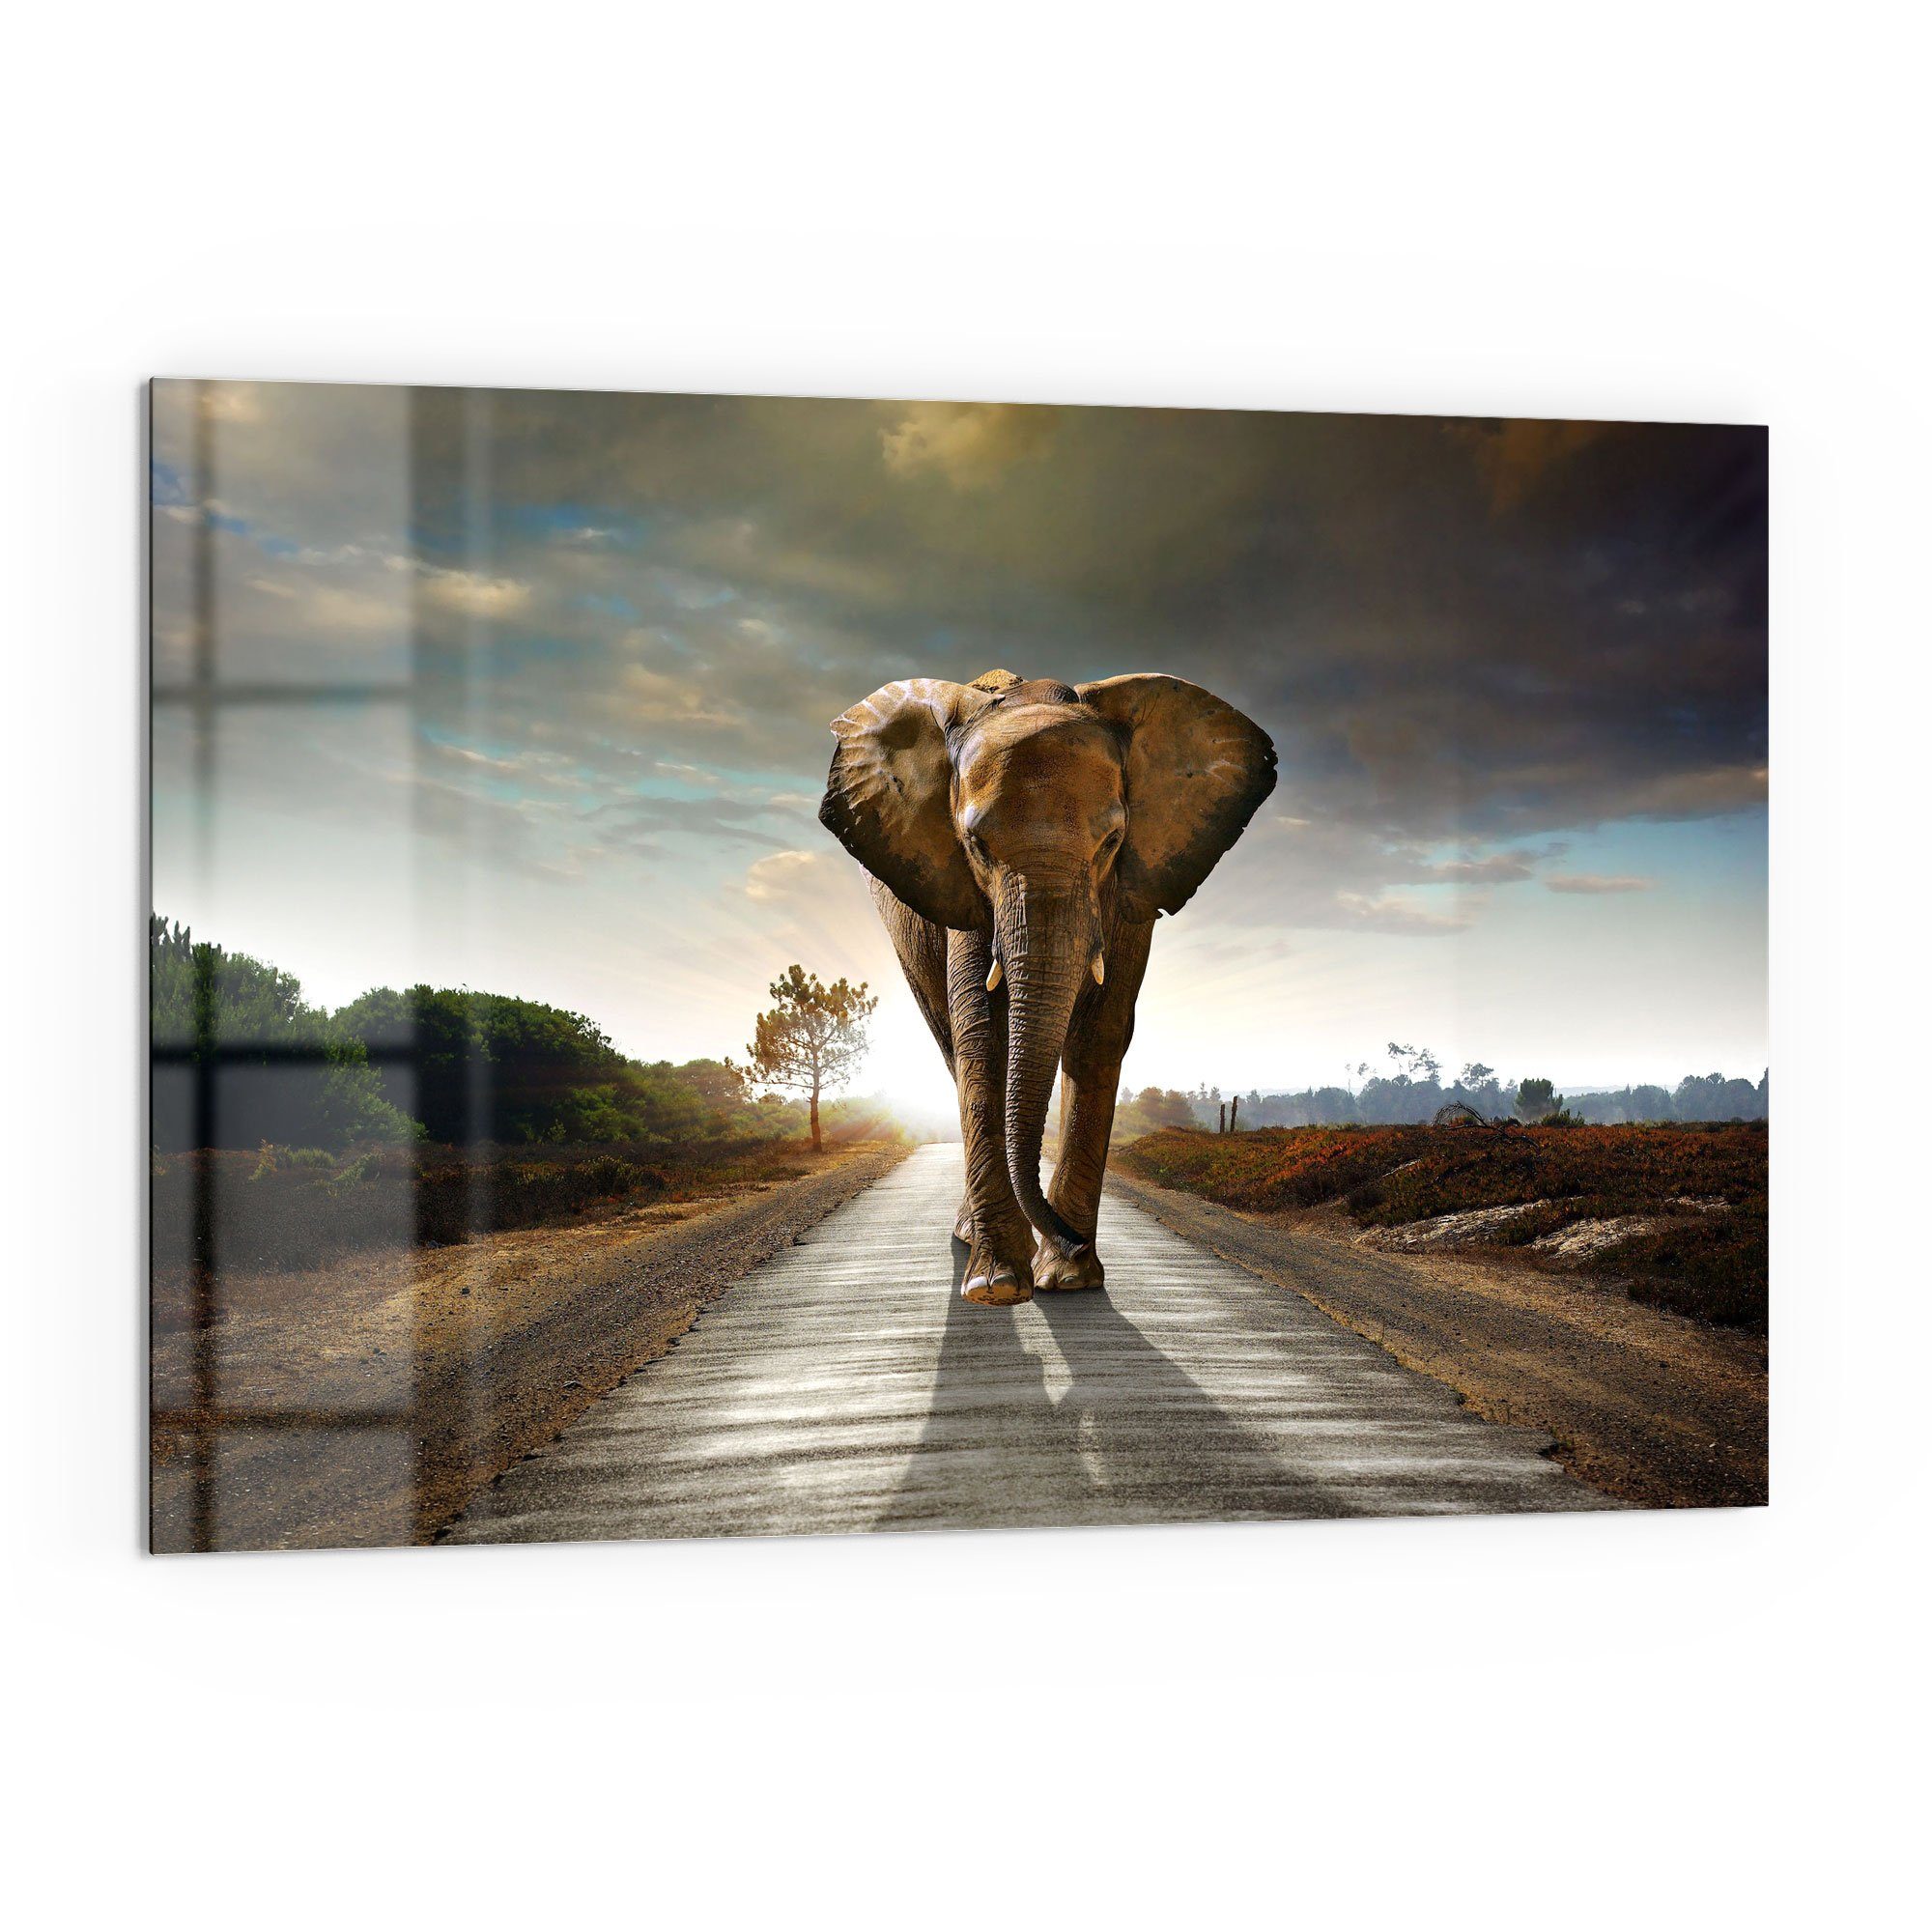 DEQORI Küchenrückwand 'Elefant auf Asphalt', Glas Spritzschutz Badrückwand Herdblende